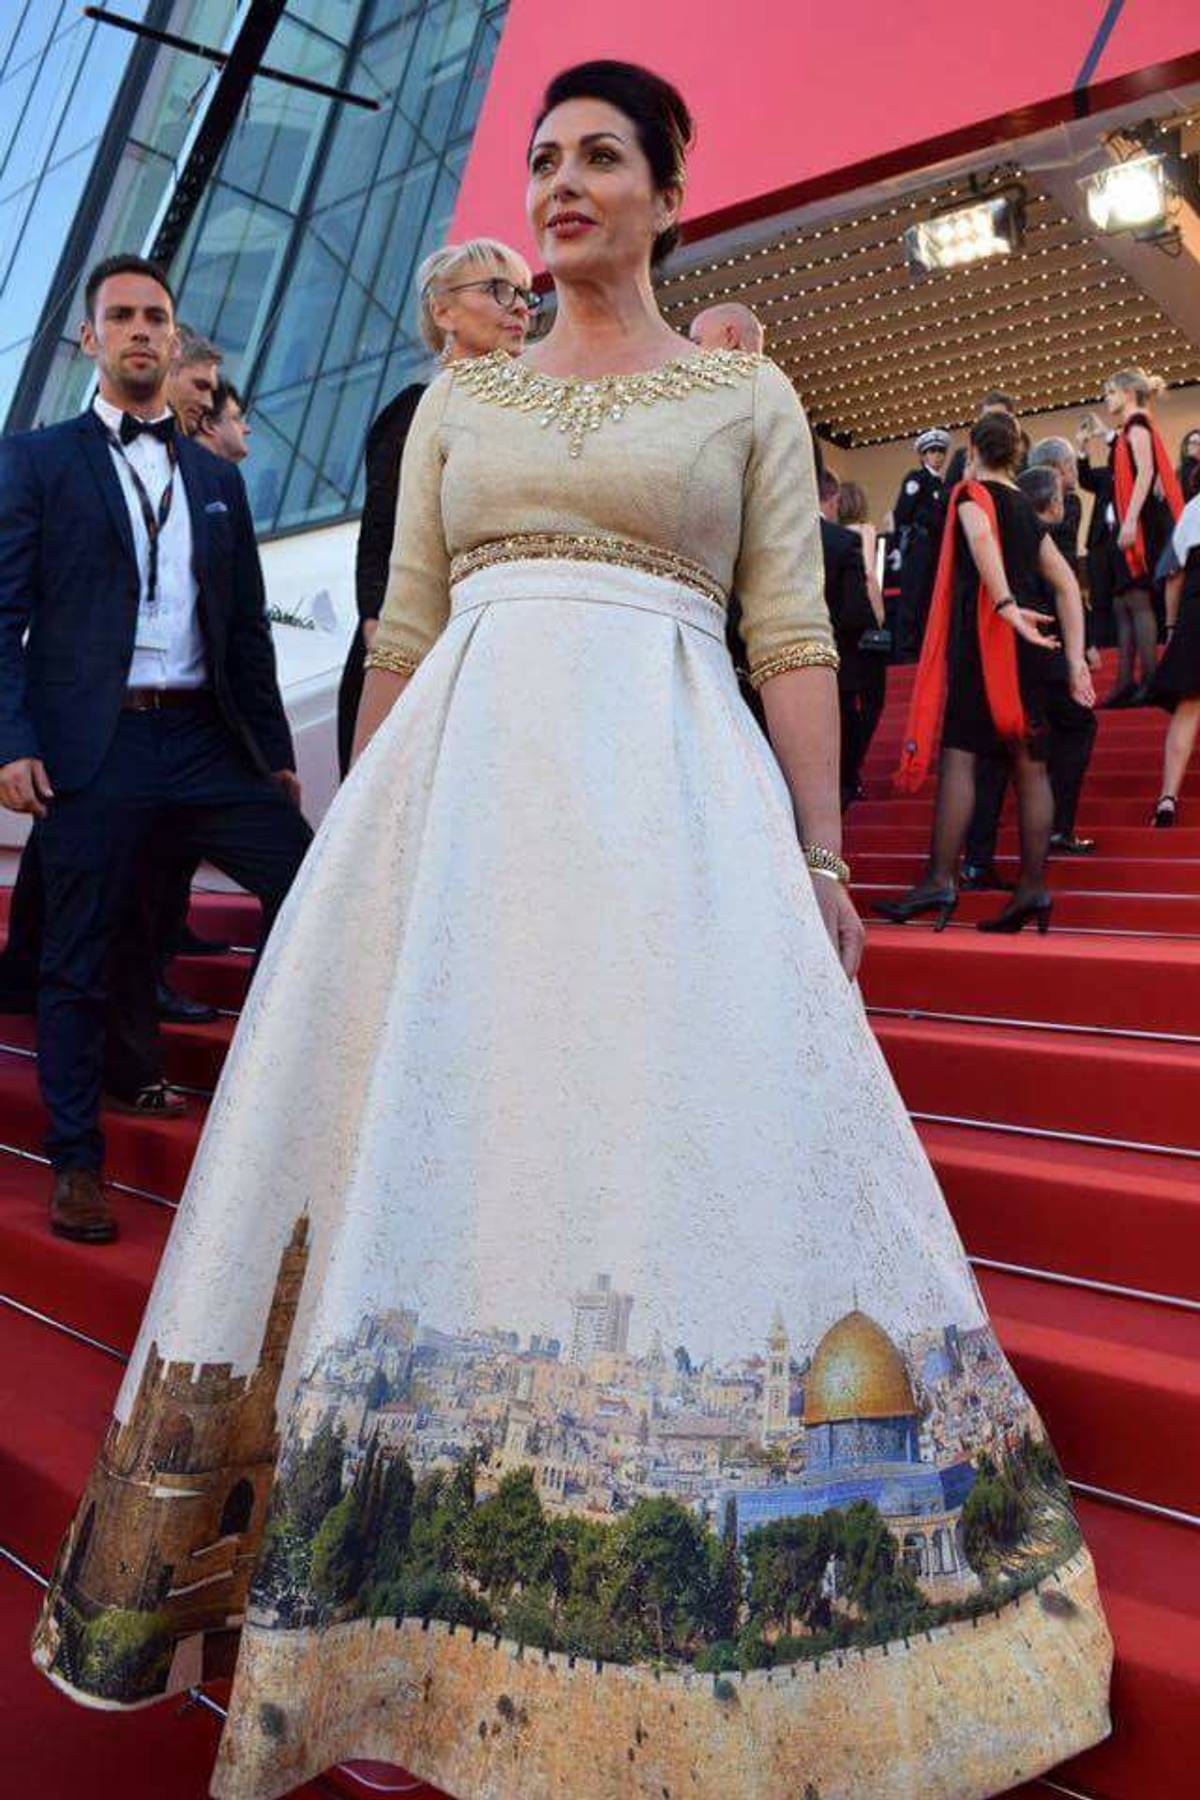 Israeli Culture Minister Miri Regev at Cannes. (Facebook)